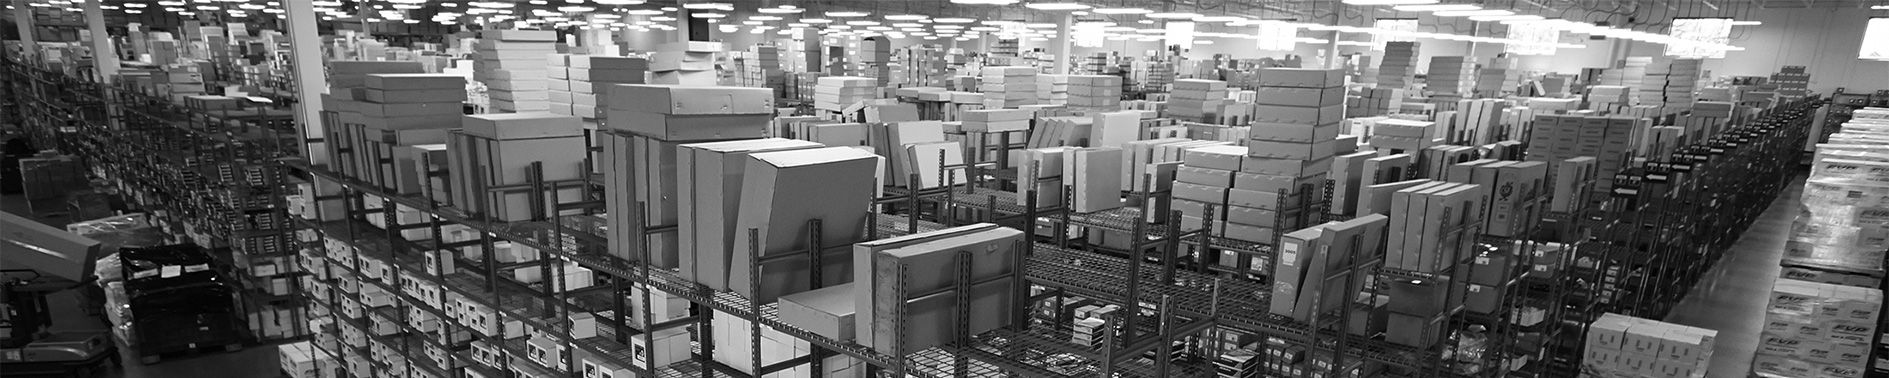 Warehouse shelving ProductsBanner 